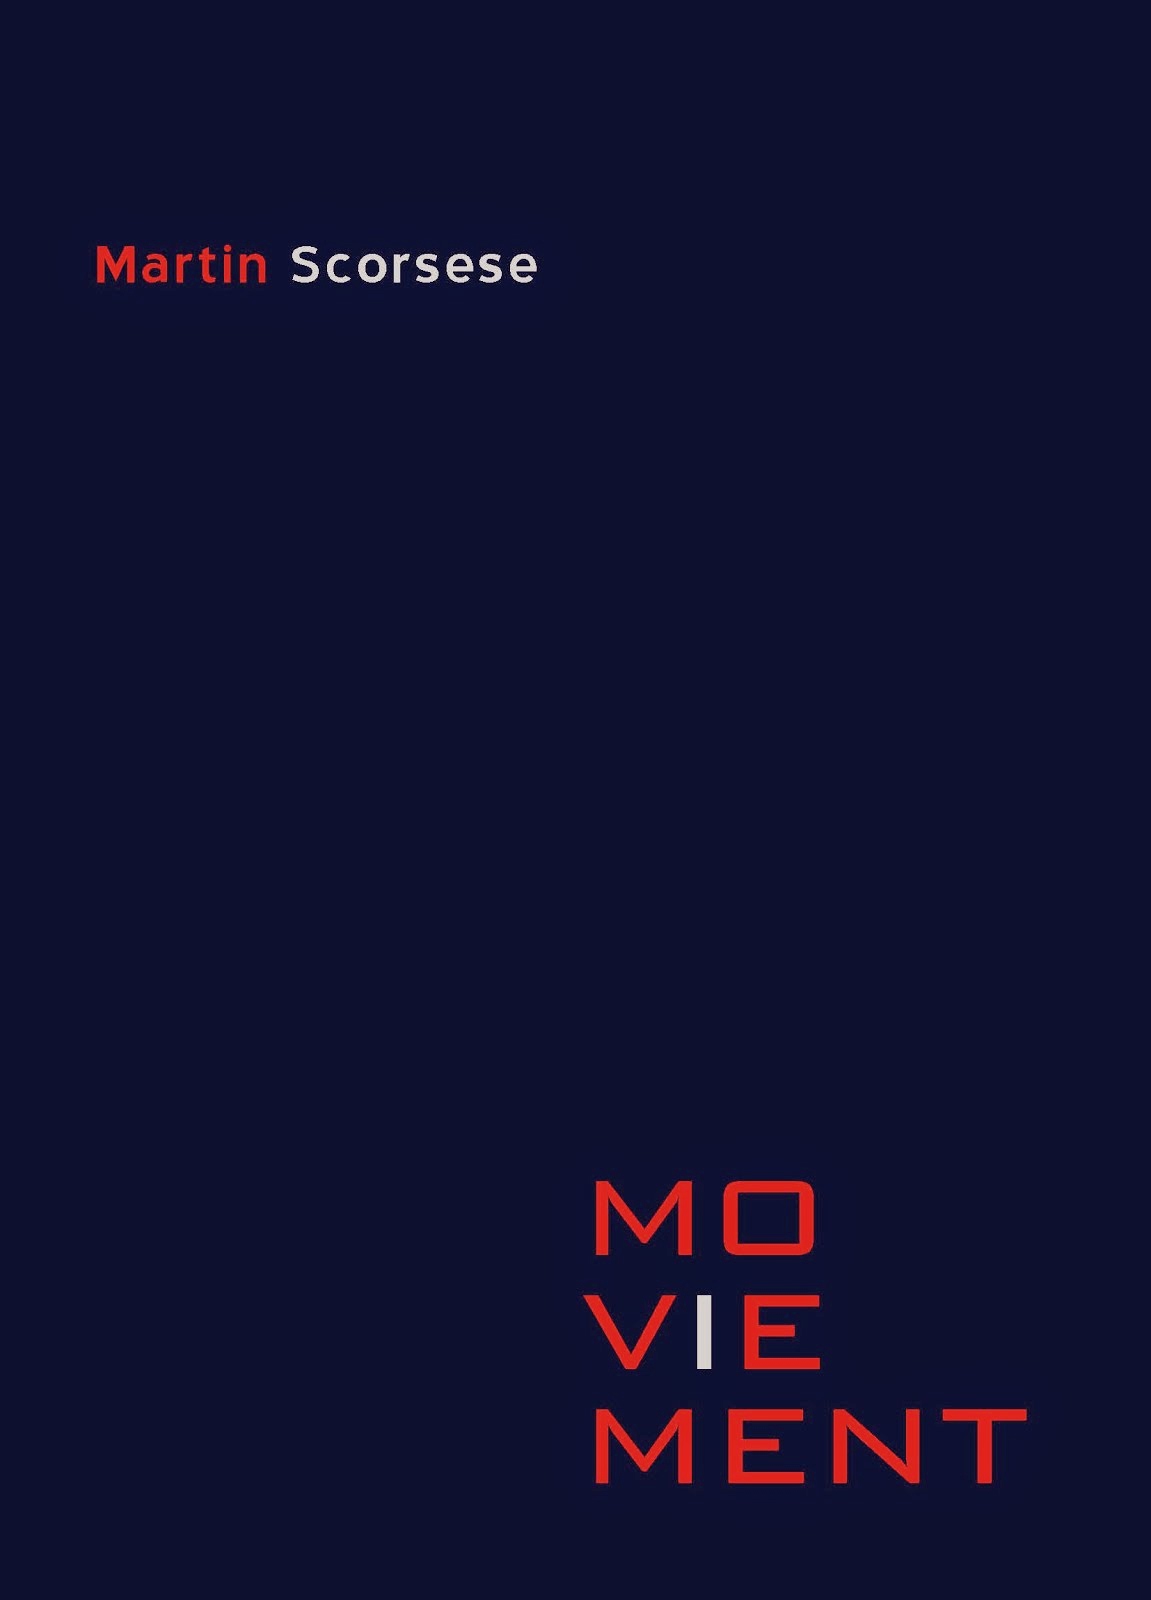 Moviement n°10 - Martin Scorsese